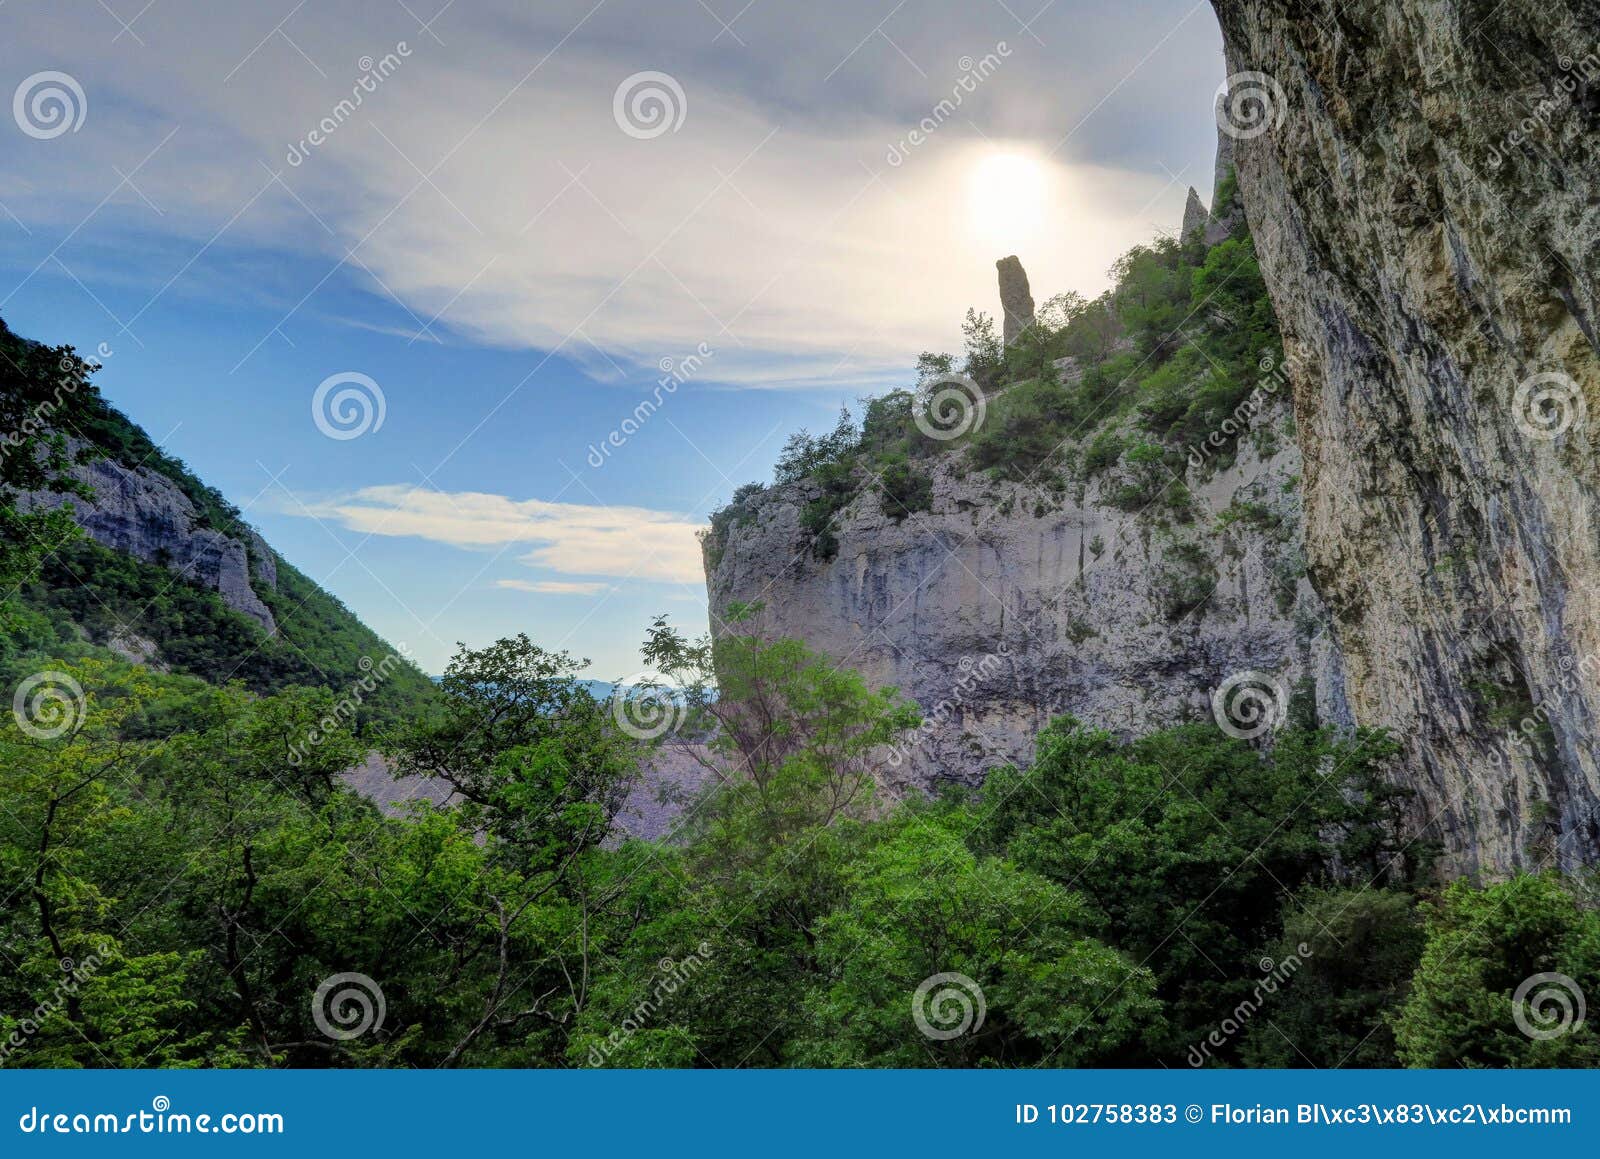 rock wall in vela draga canyon, ucka national park, croatia